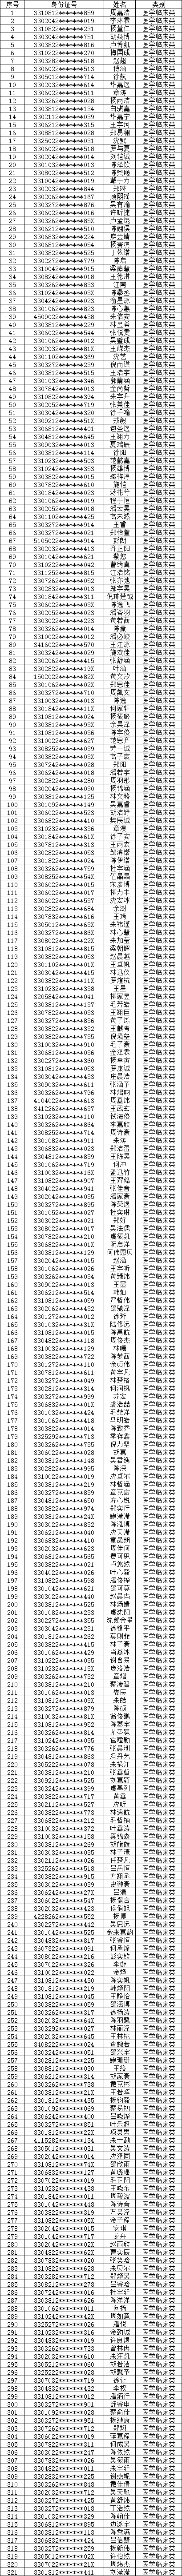 <a href='/zhuanlan/zhejiangbk/07/'>温州医科大学</a>2022年“三位一体”综合测试面试环节入围名单公布